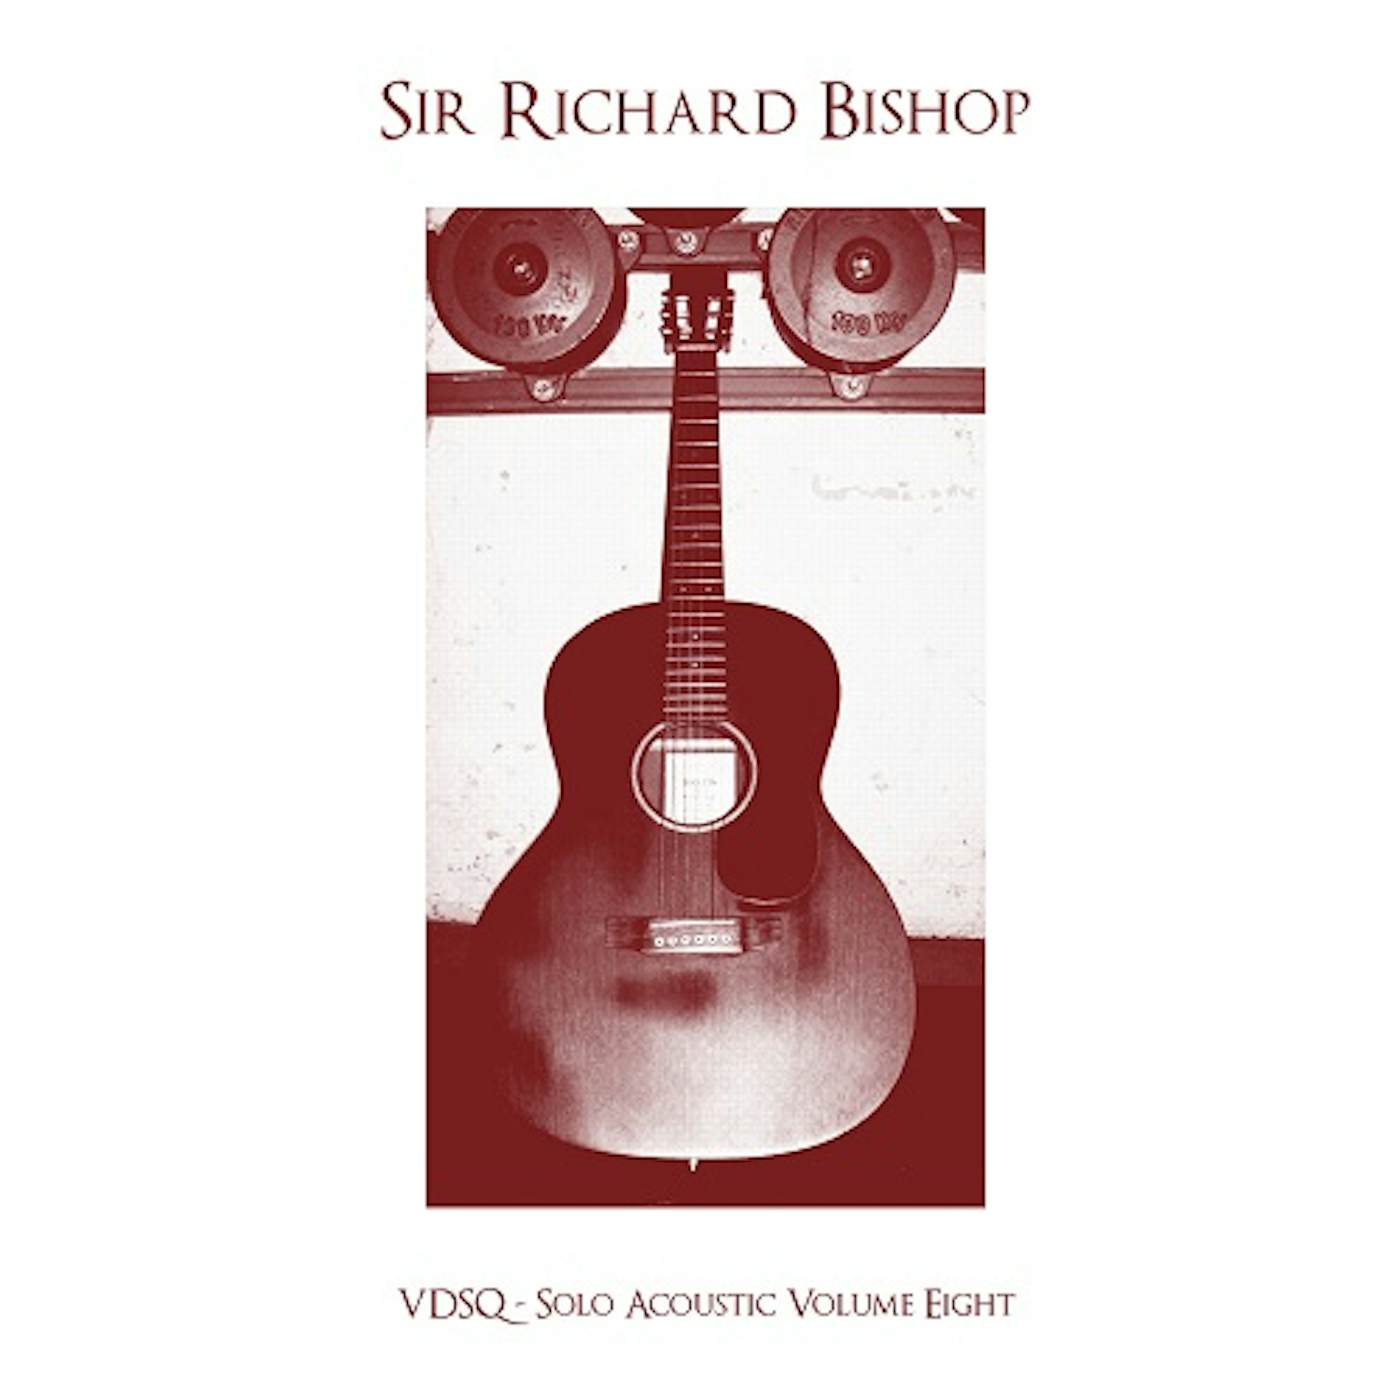 Sir Richard Bishop VDSQ SOLO ACOUSTIC VOL. 8 Vinyl Record